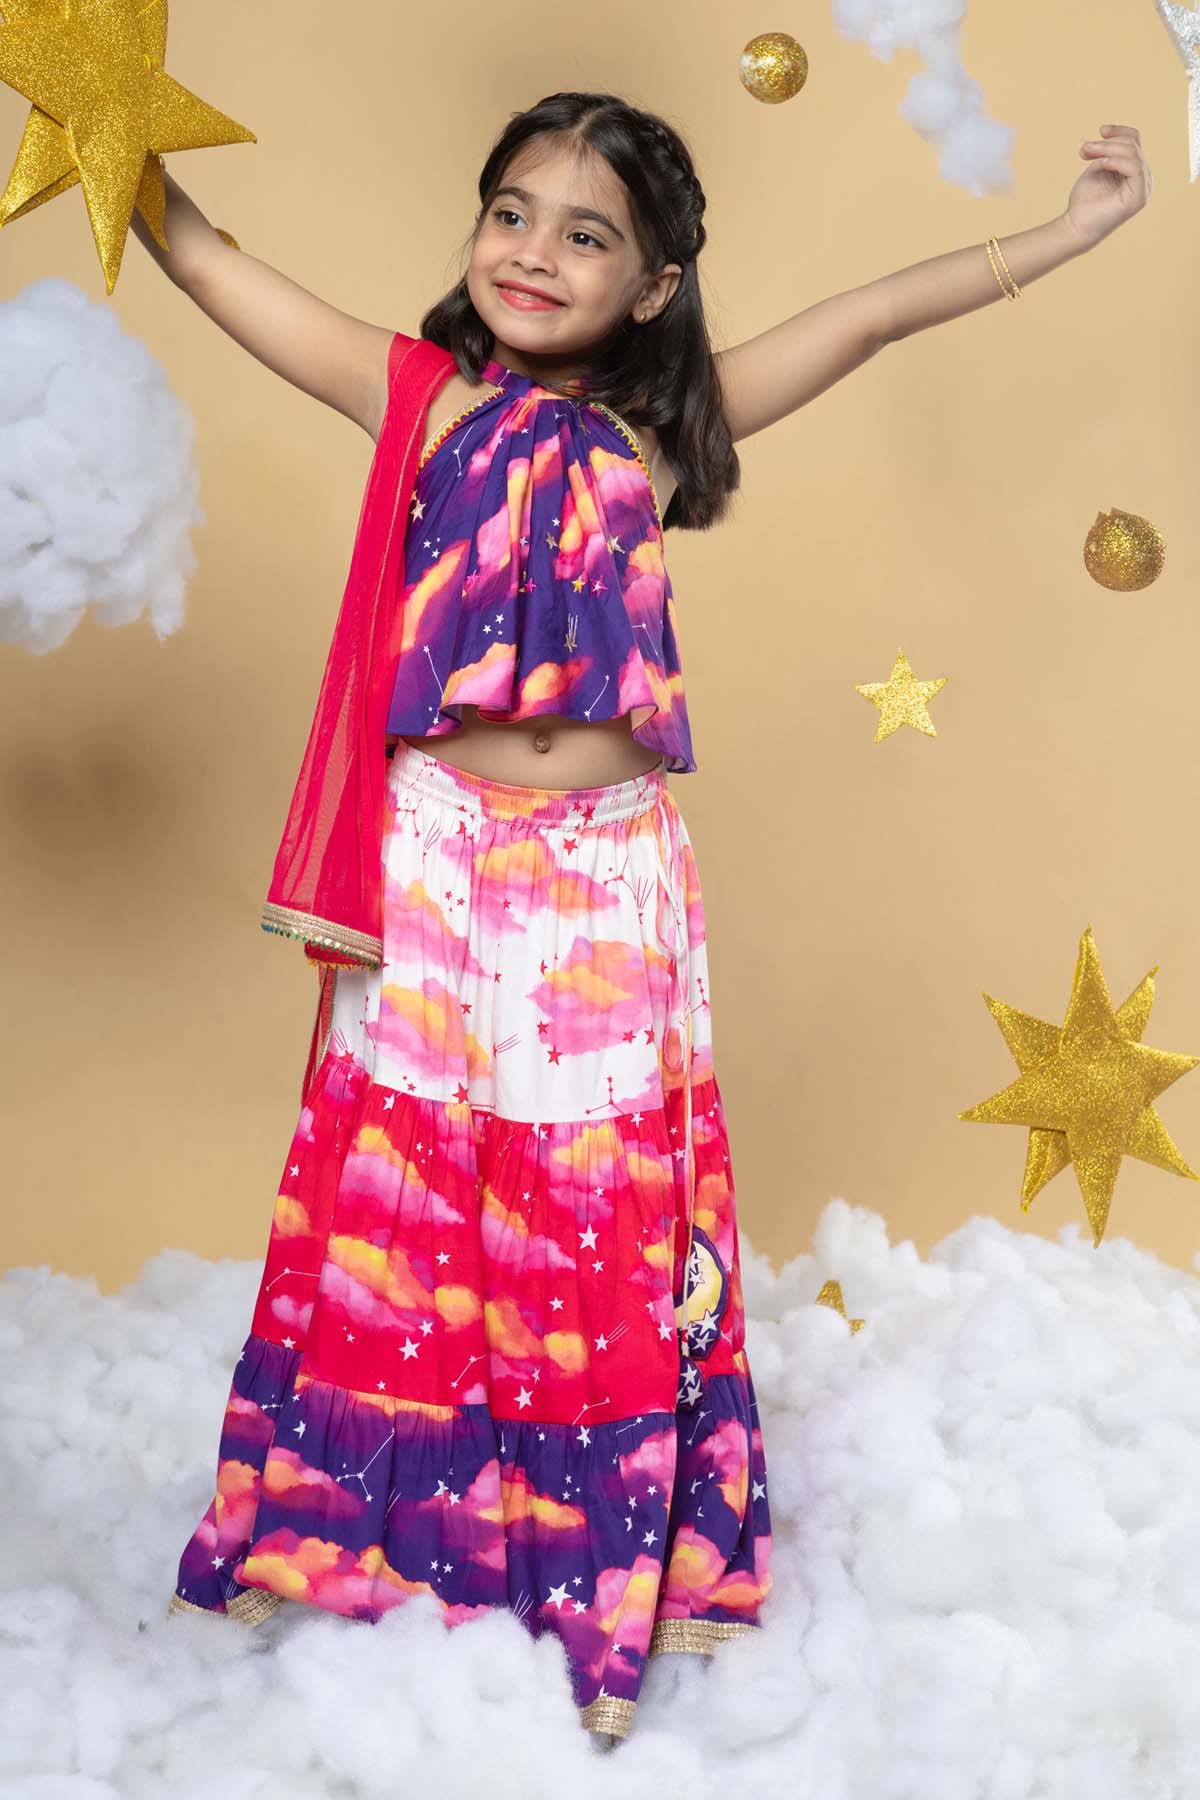 Designer Little Shiro Clouds Printed Lehenga Set For Kids Available online at ScrollnShops